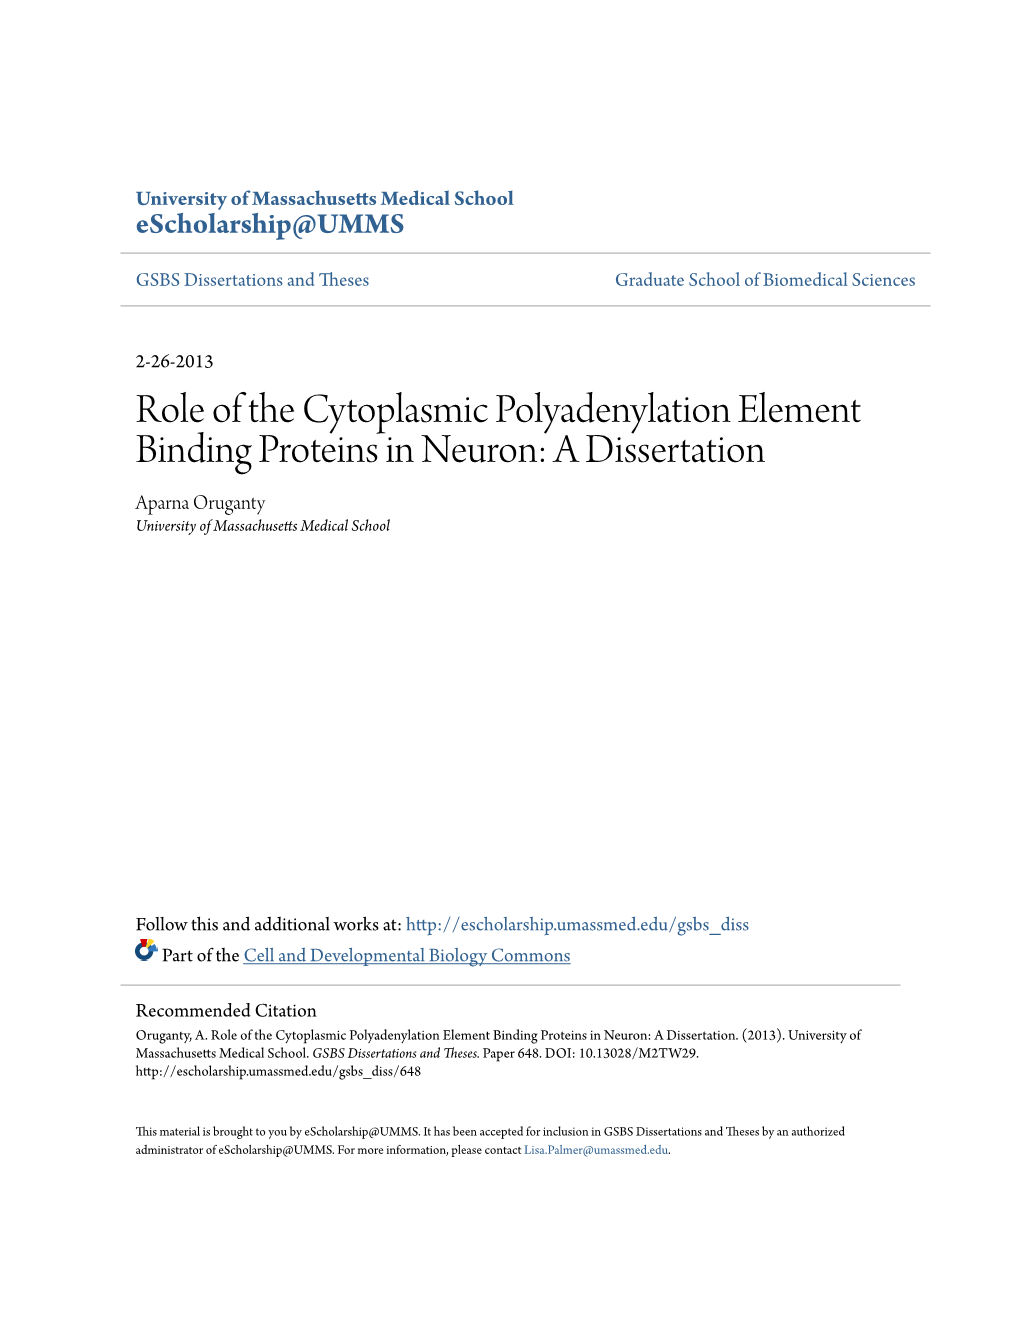 Role of the Cytoplasmic Polyadenylation Element Binding Proteins in Neuron: a Dissertation Aparna Oruganty University of Massachusetts Em Dical School